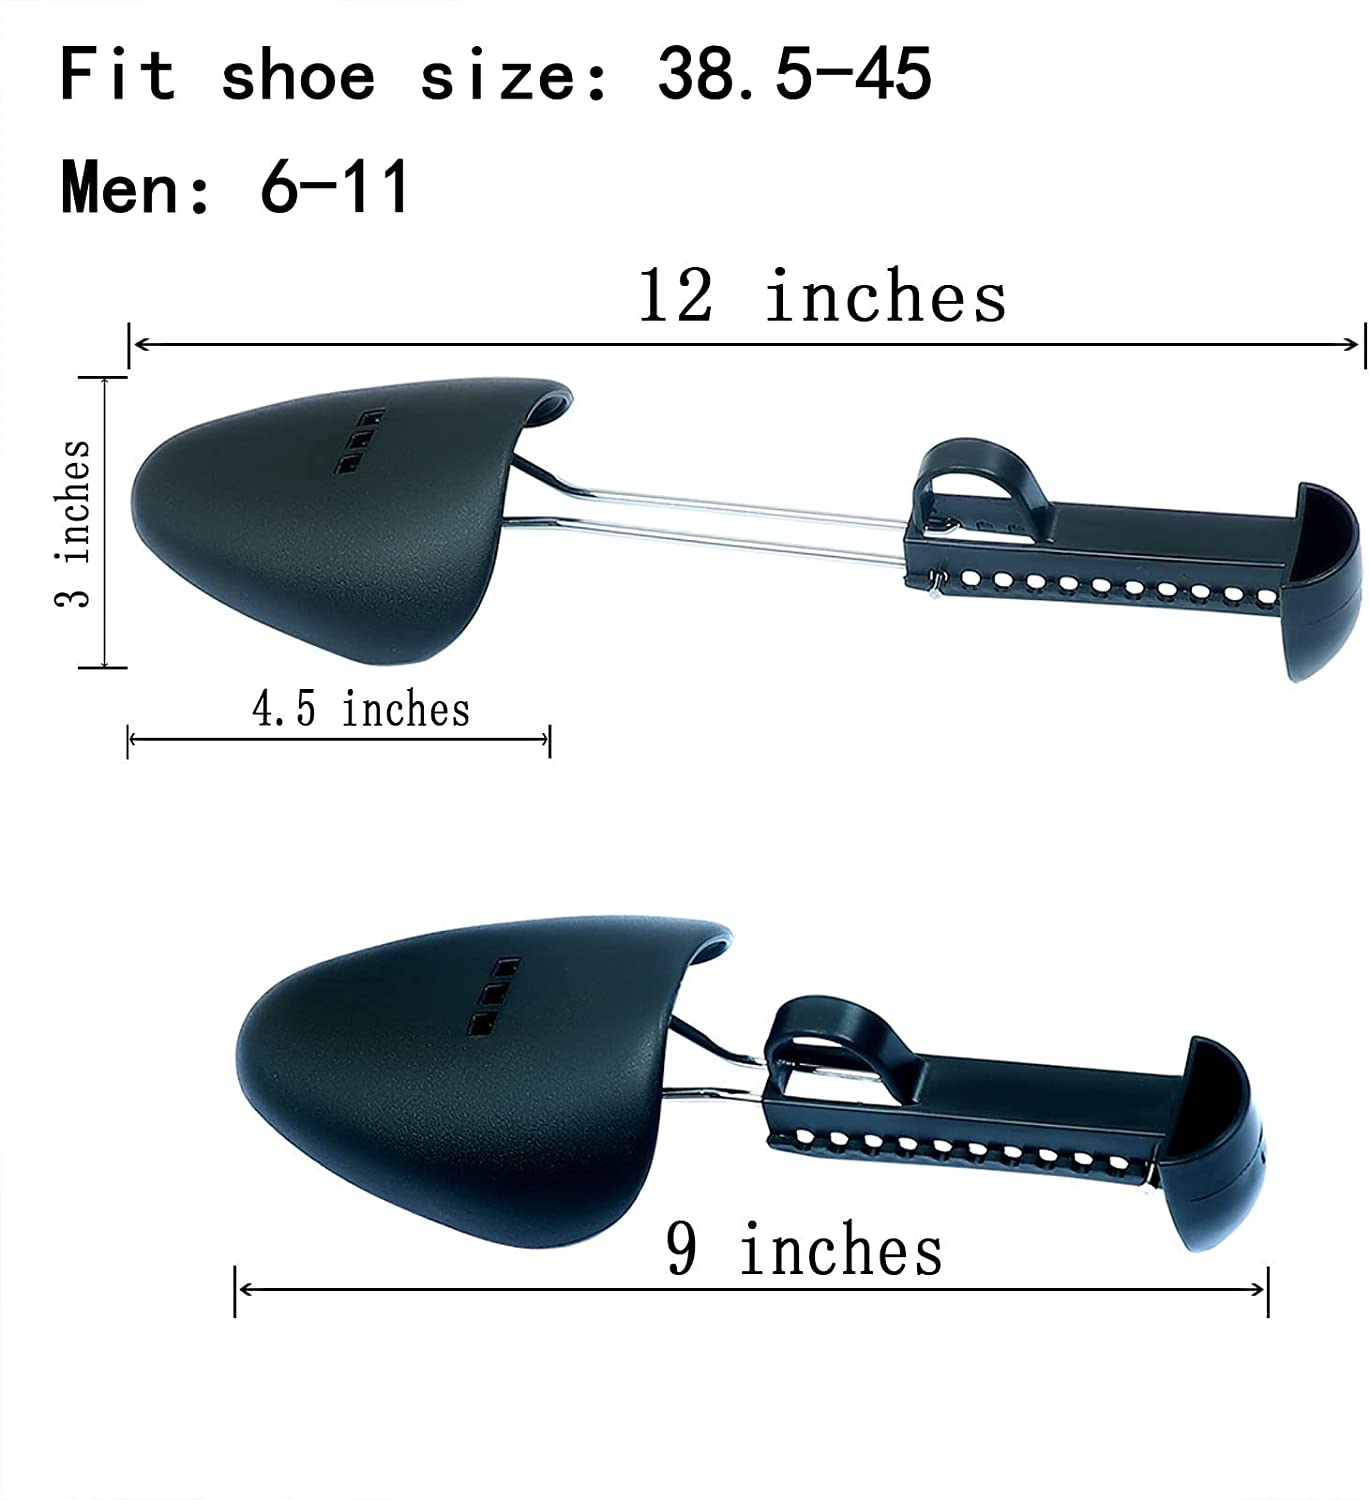 ZJHSXDR 2 Pairs Plastic Shoe Tree Stretcher Shaper for Men (Black)